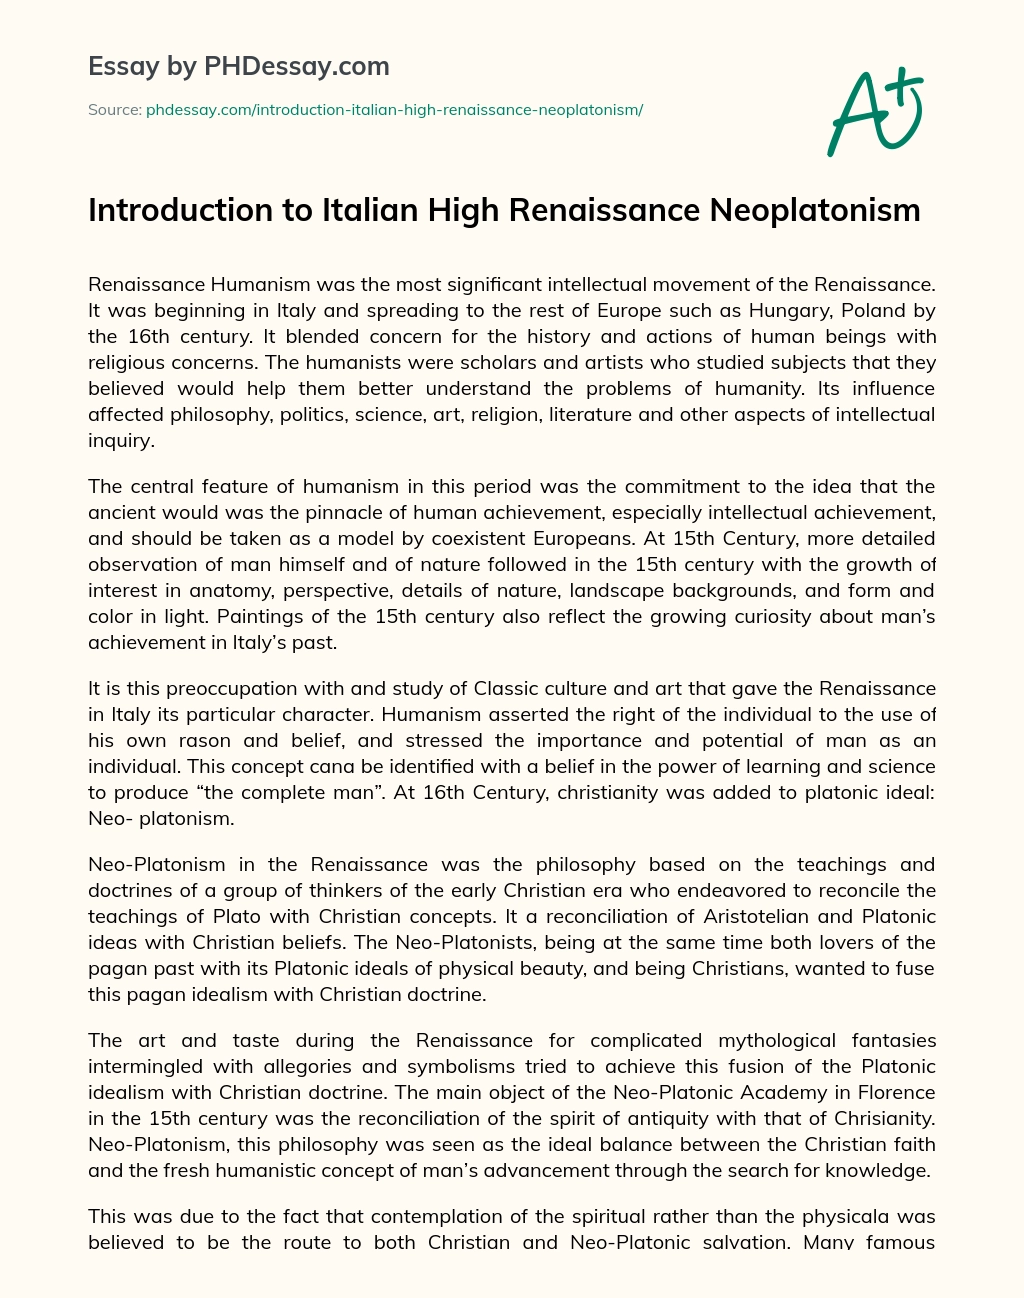 Introduction to Italian High Renaissance Neoplatonism essay